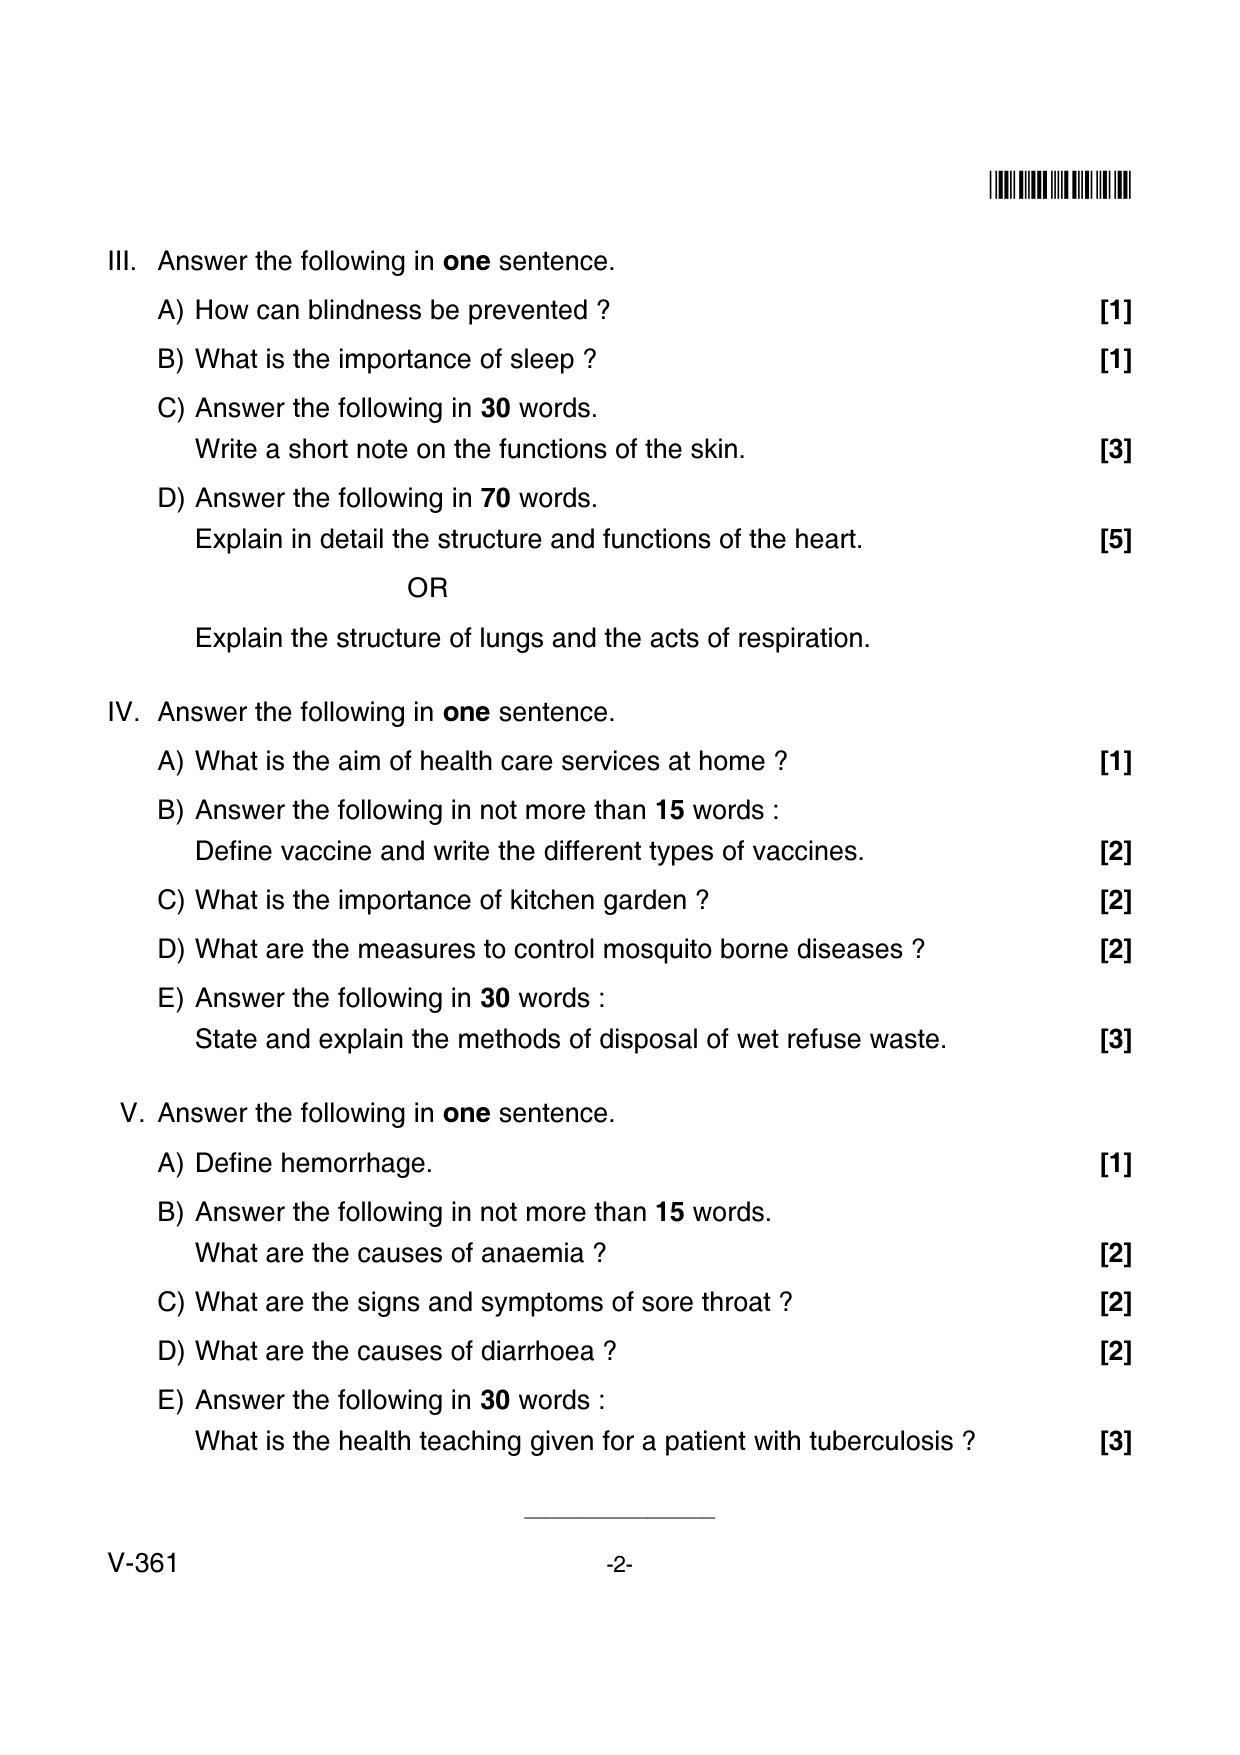 Goa Board Class 12 Fundamentals of Nursing - II  Voc 361 New Pattern (March 2018) Question Paper - Page 2